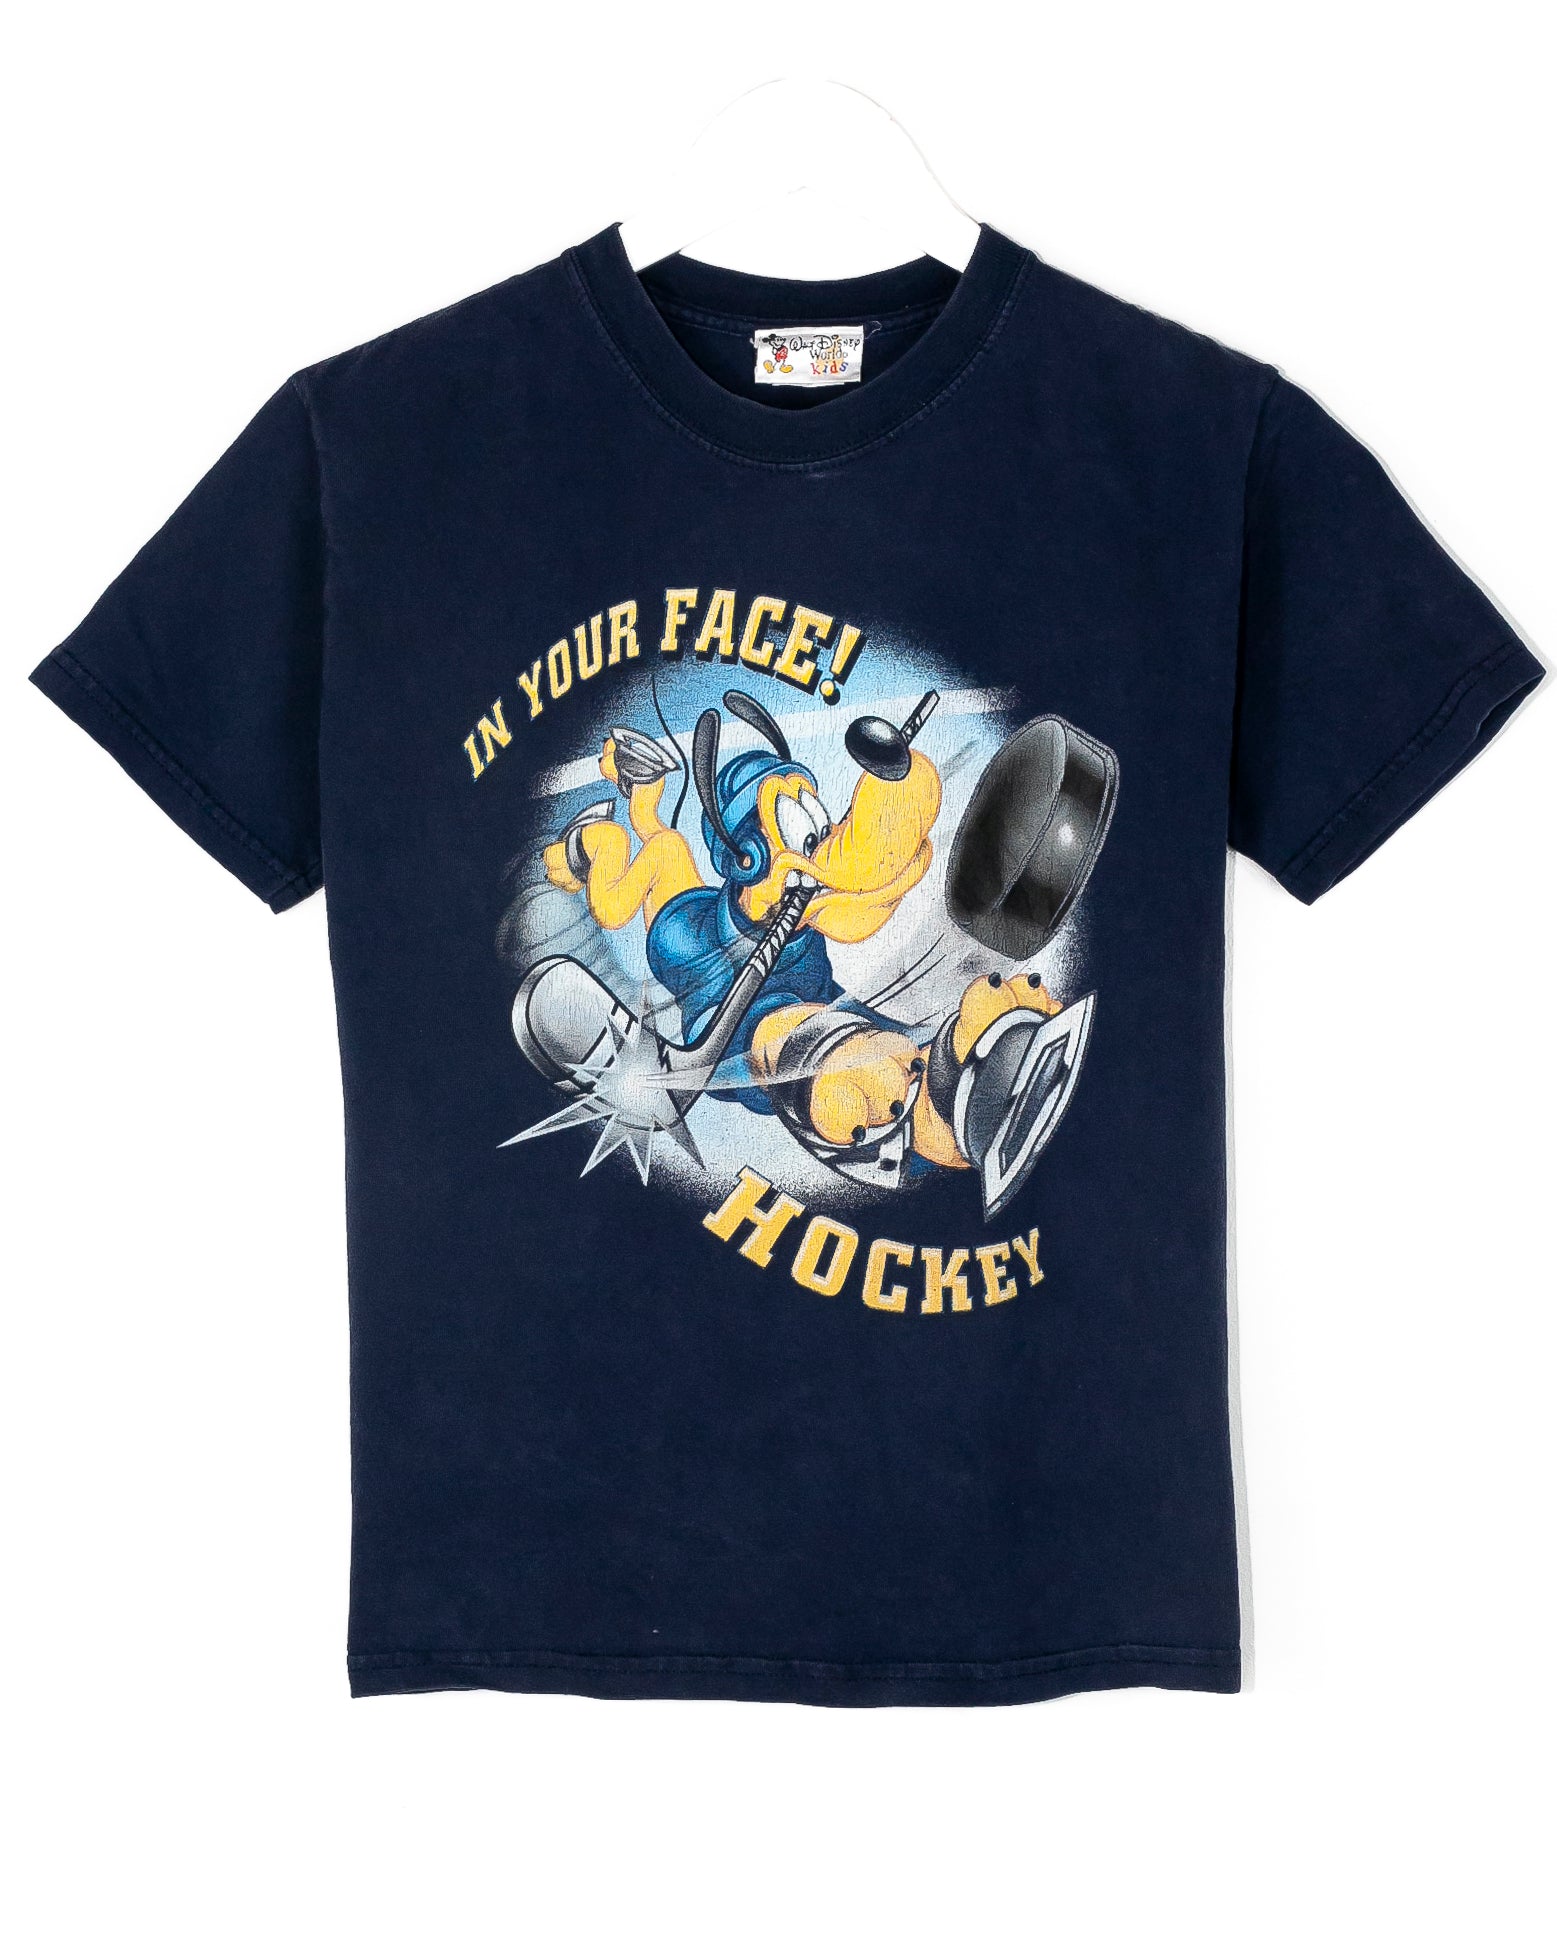 Vintage Cartoon Hockey T-Shirt (S)